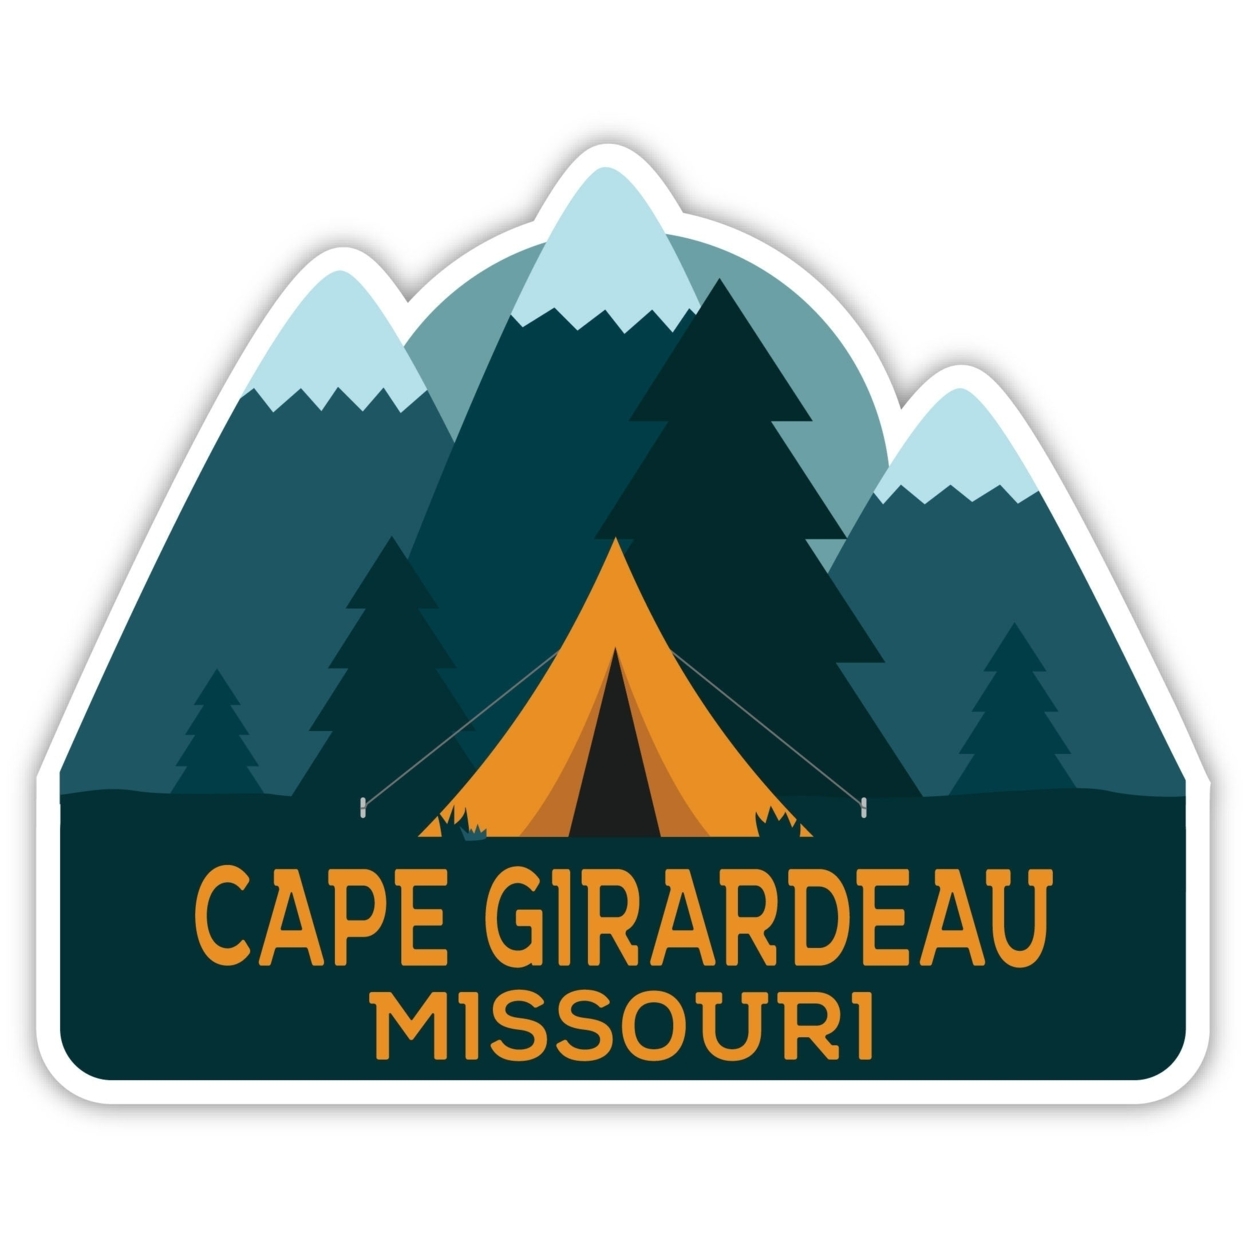 Cape Girardeau Missouri Souvenir Decorative Stickers (Choose Theme And Size) - 4-Pack, 2-Inch, Tent